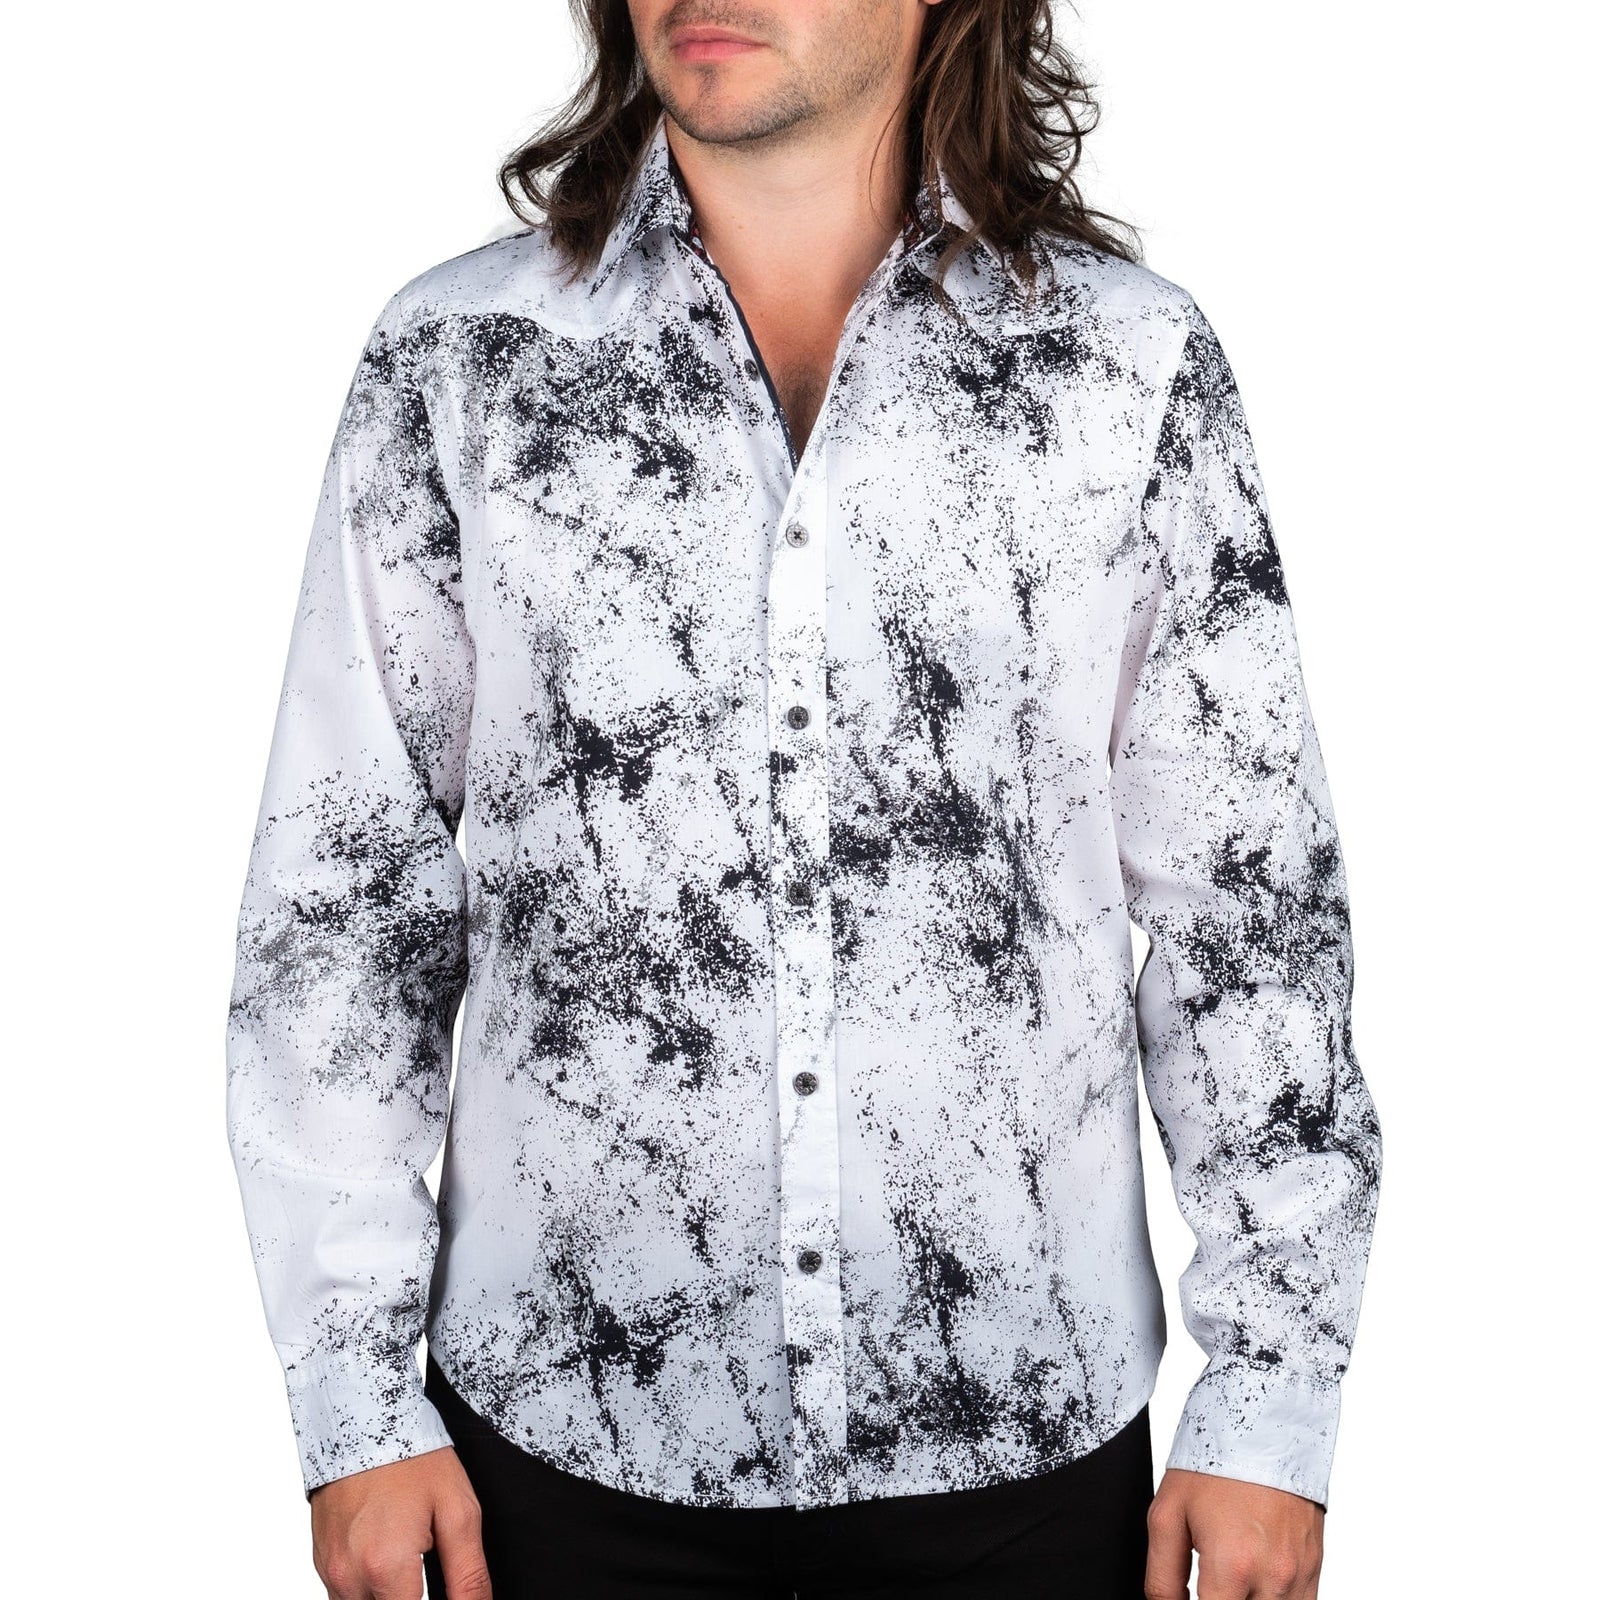 Wornstar Clothing Mens Shirt. Button Down White Noise Long Sleeve Shirt